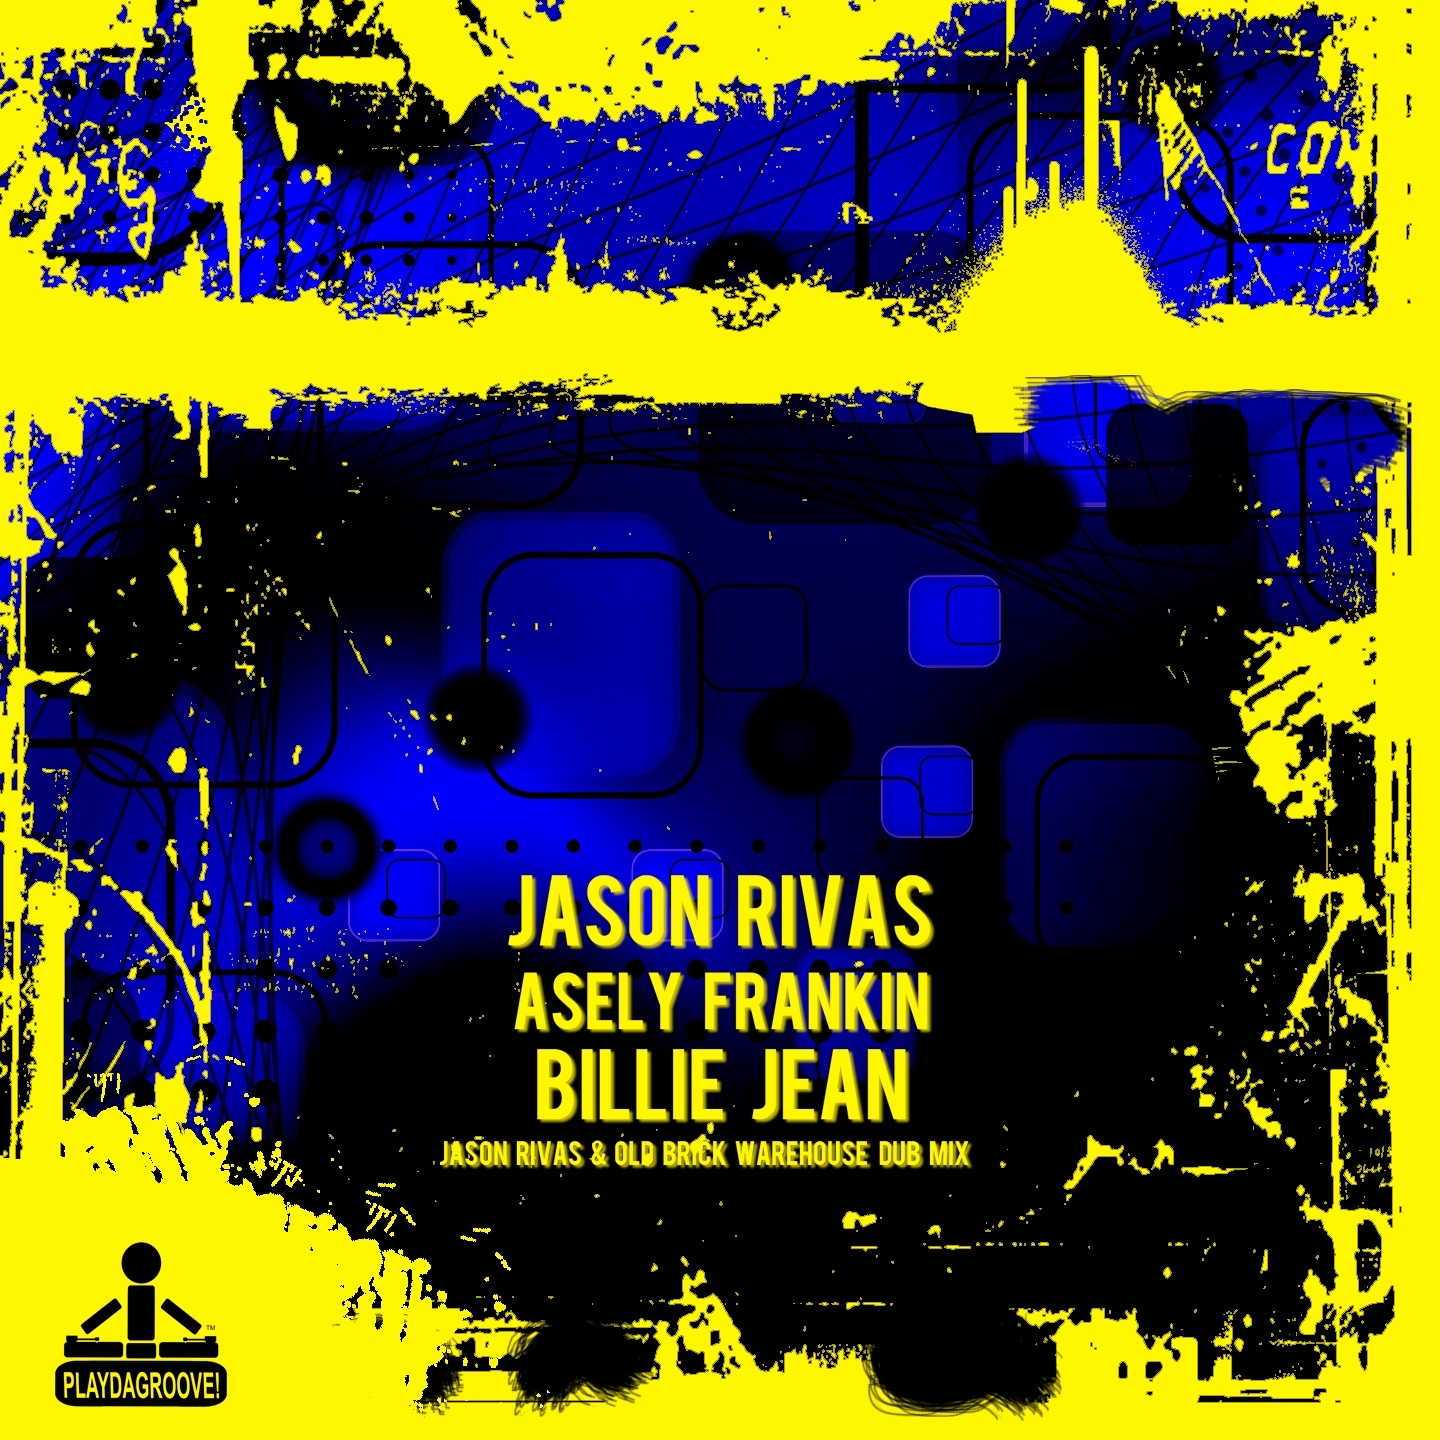 Billie Jean (Jason Rivas & Old Brick Warehouse Dub Mix)